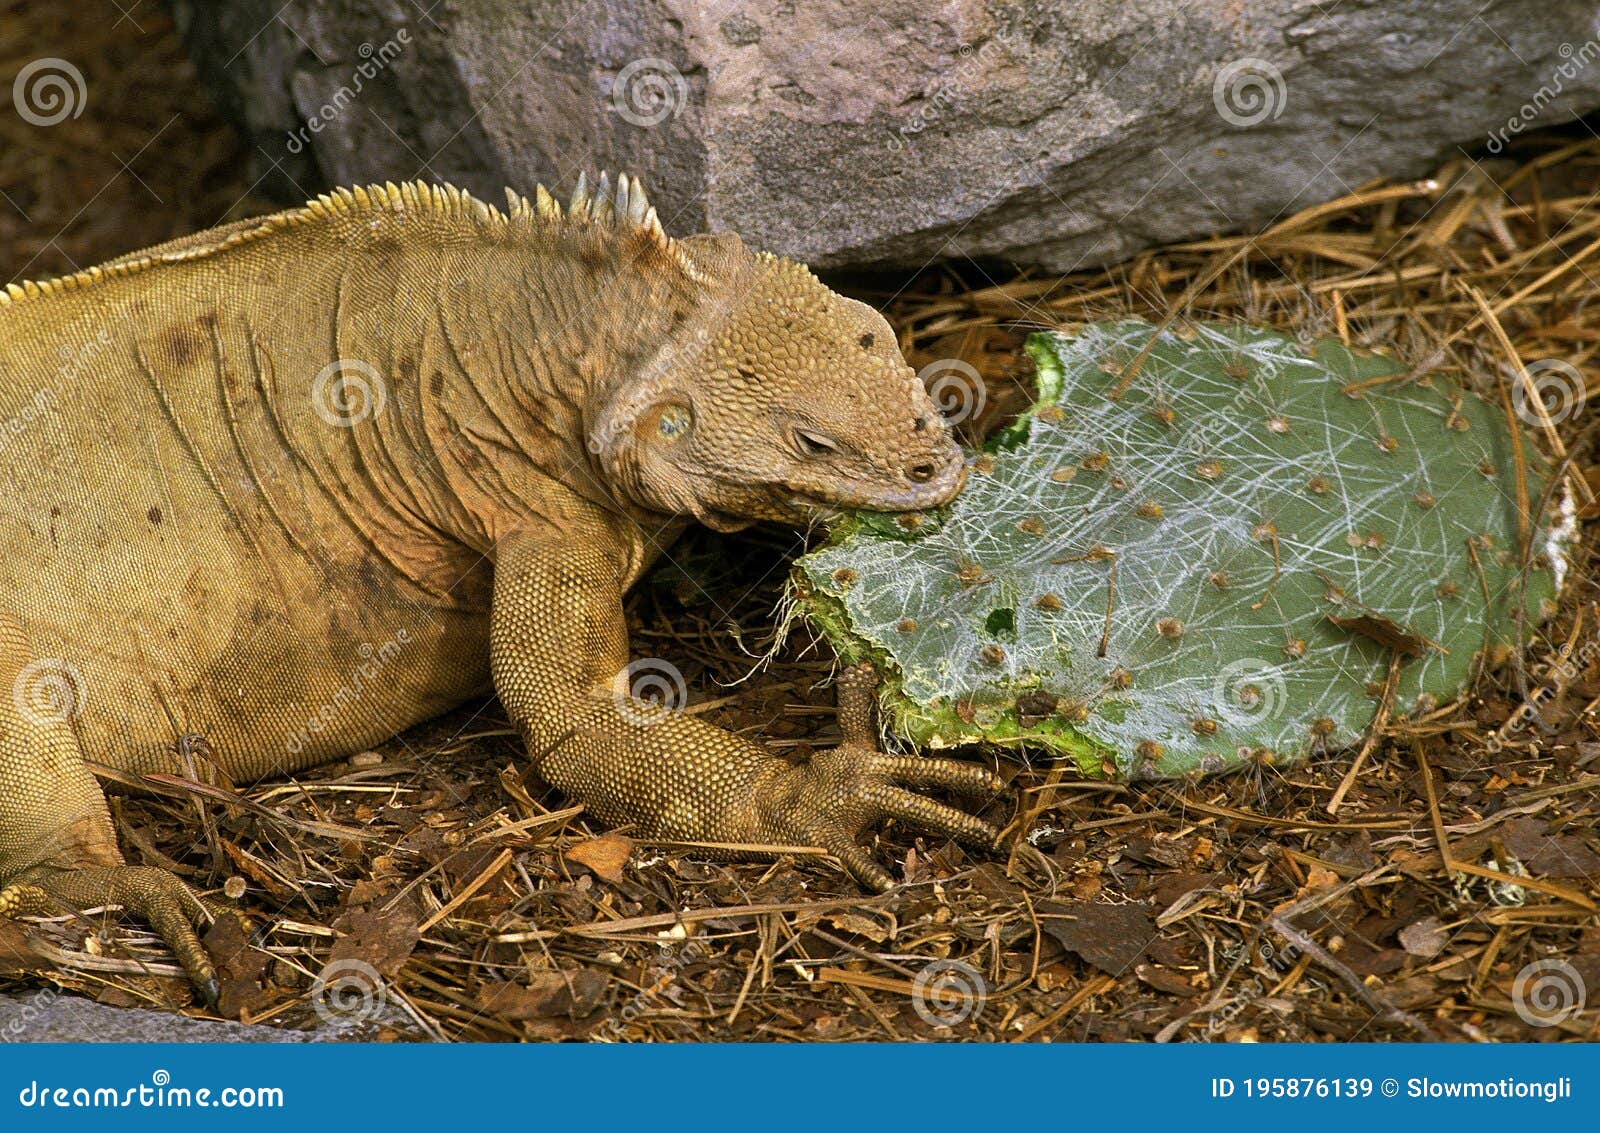 galapagos land iguana, conolophus subcristatus, adult eating prickly pear cactus, galapagos islands